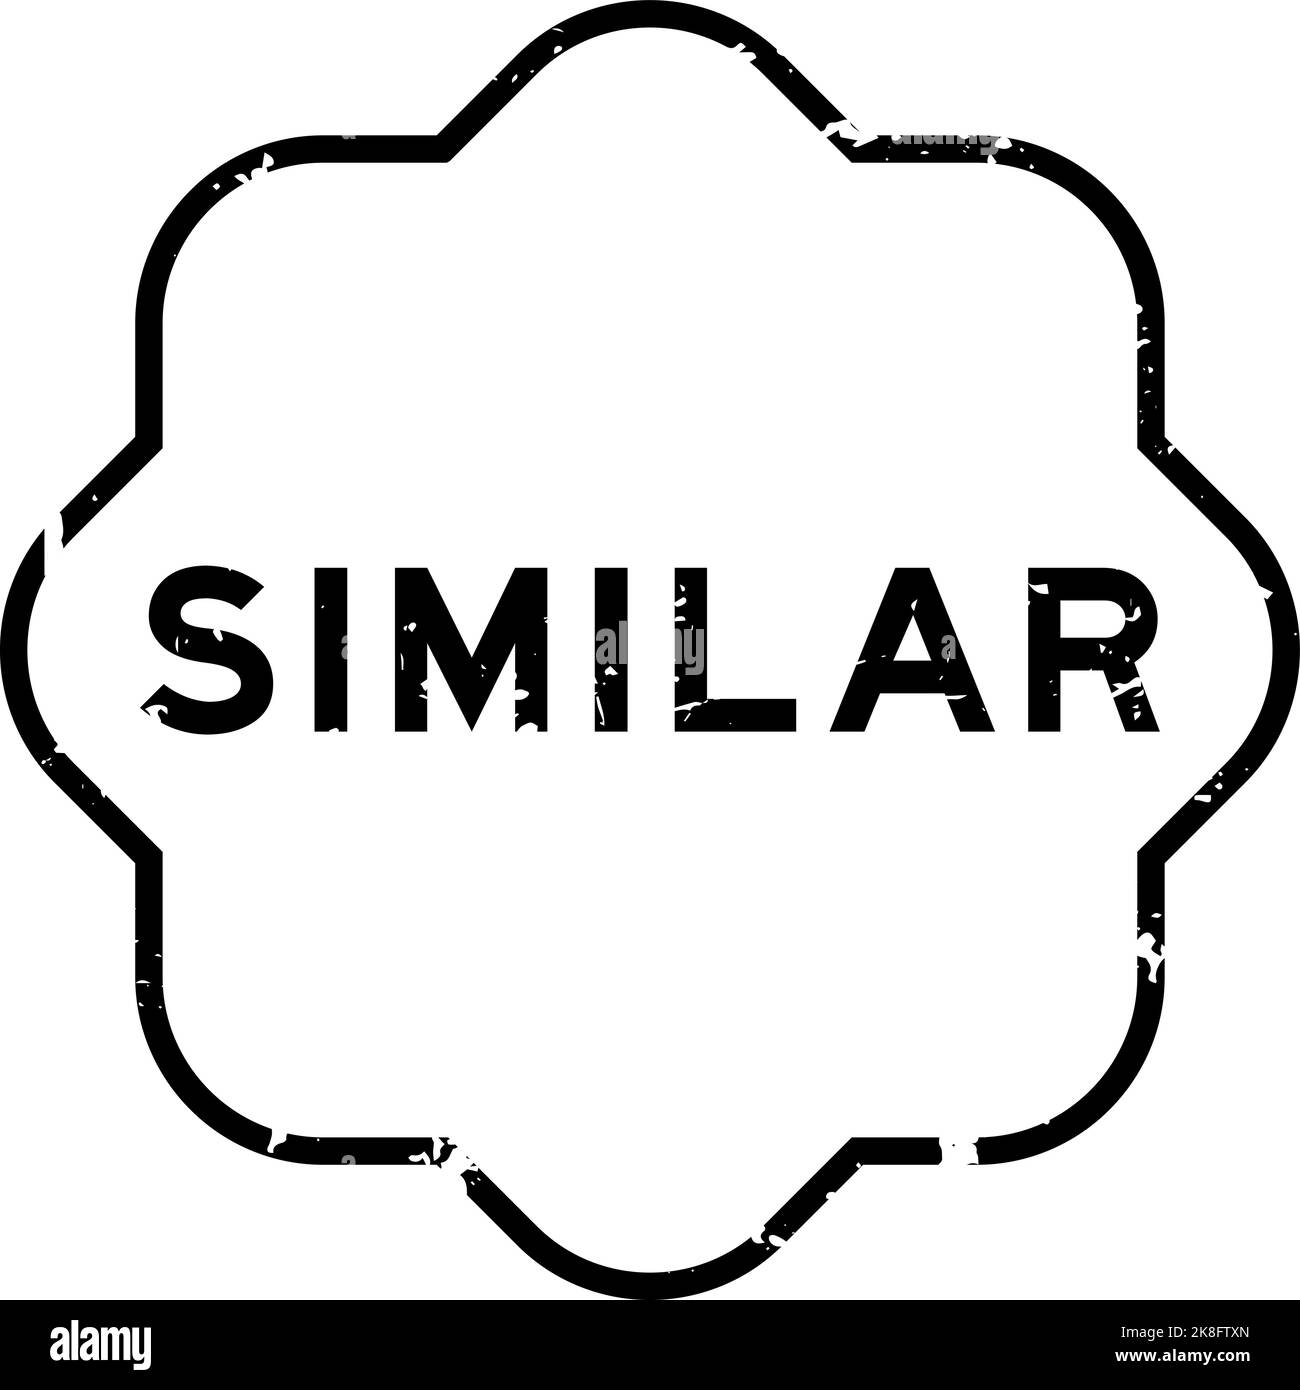 Grunge black similar word rubber seal stamp on white background Stock Vector